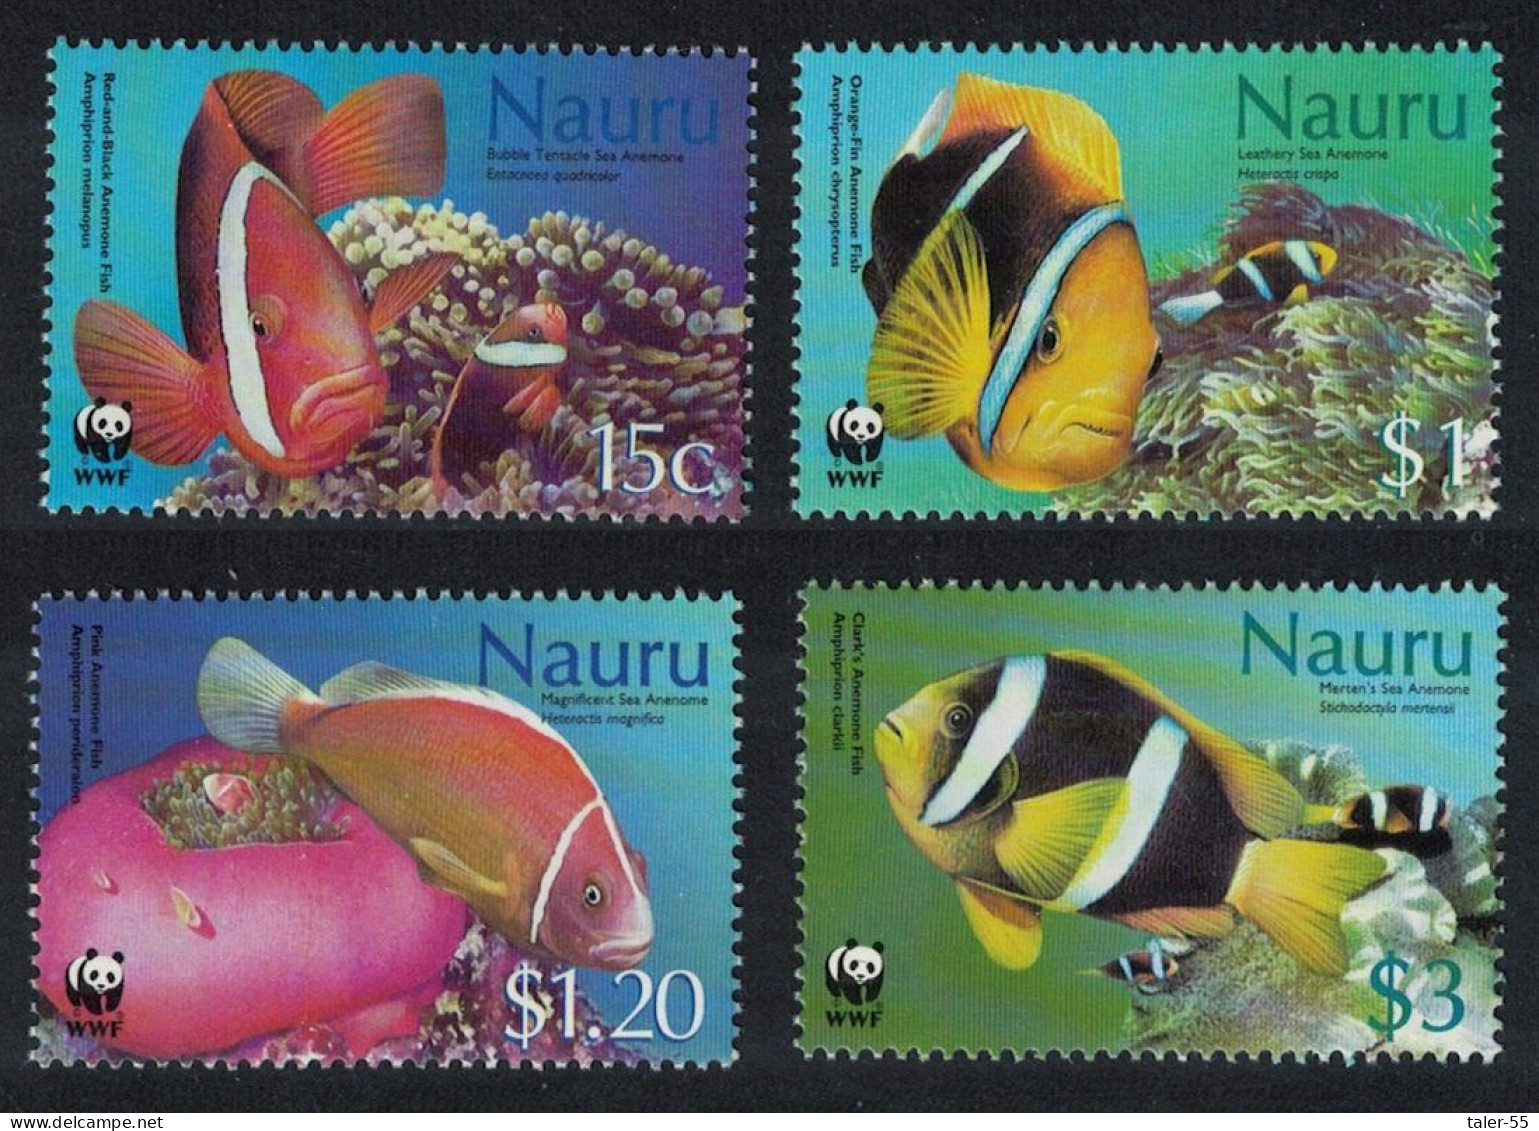 Nauru WWF Anemones Anemonefish Fish 4v 2003 MNH SG#566-569 MI#553-556 Sc#514-517 - Nauru